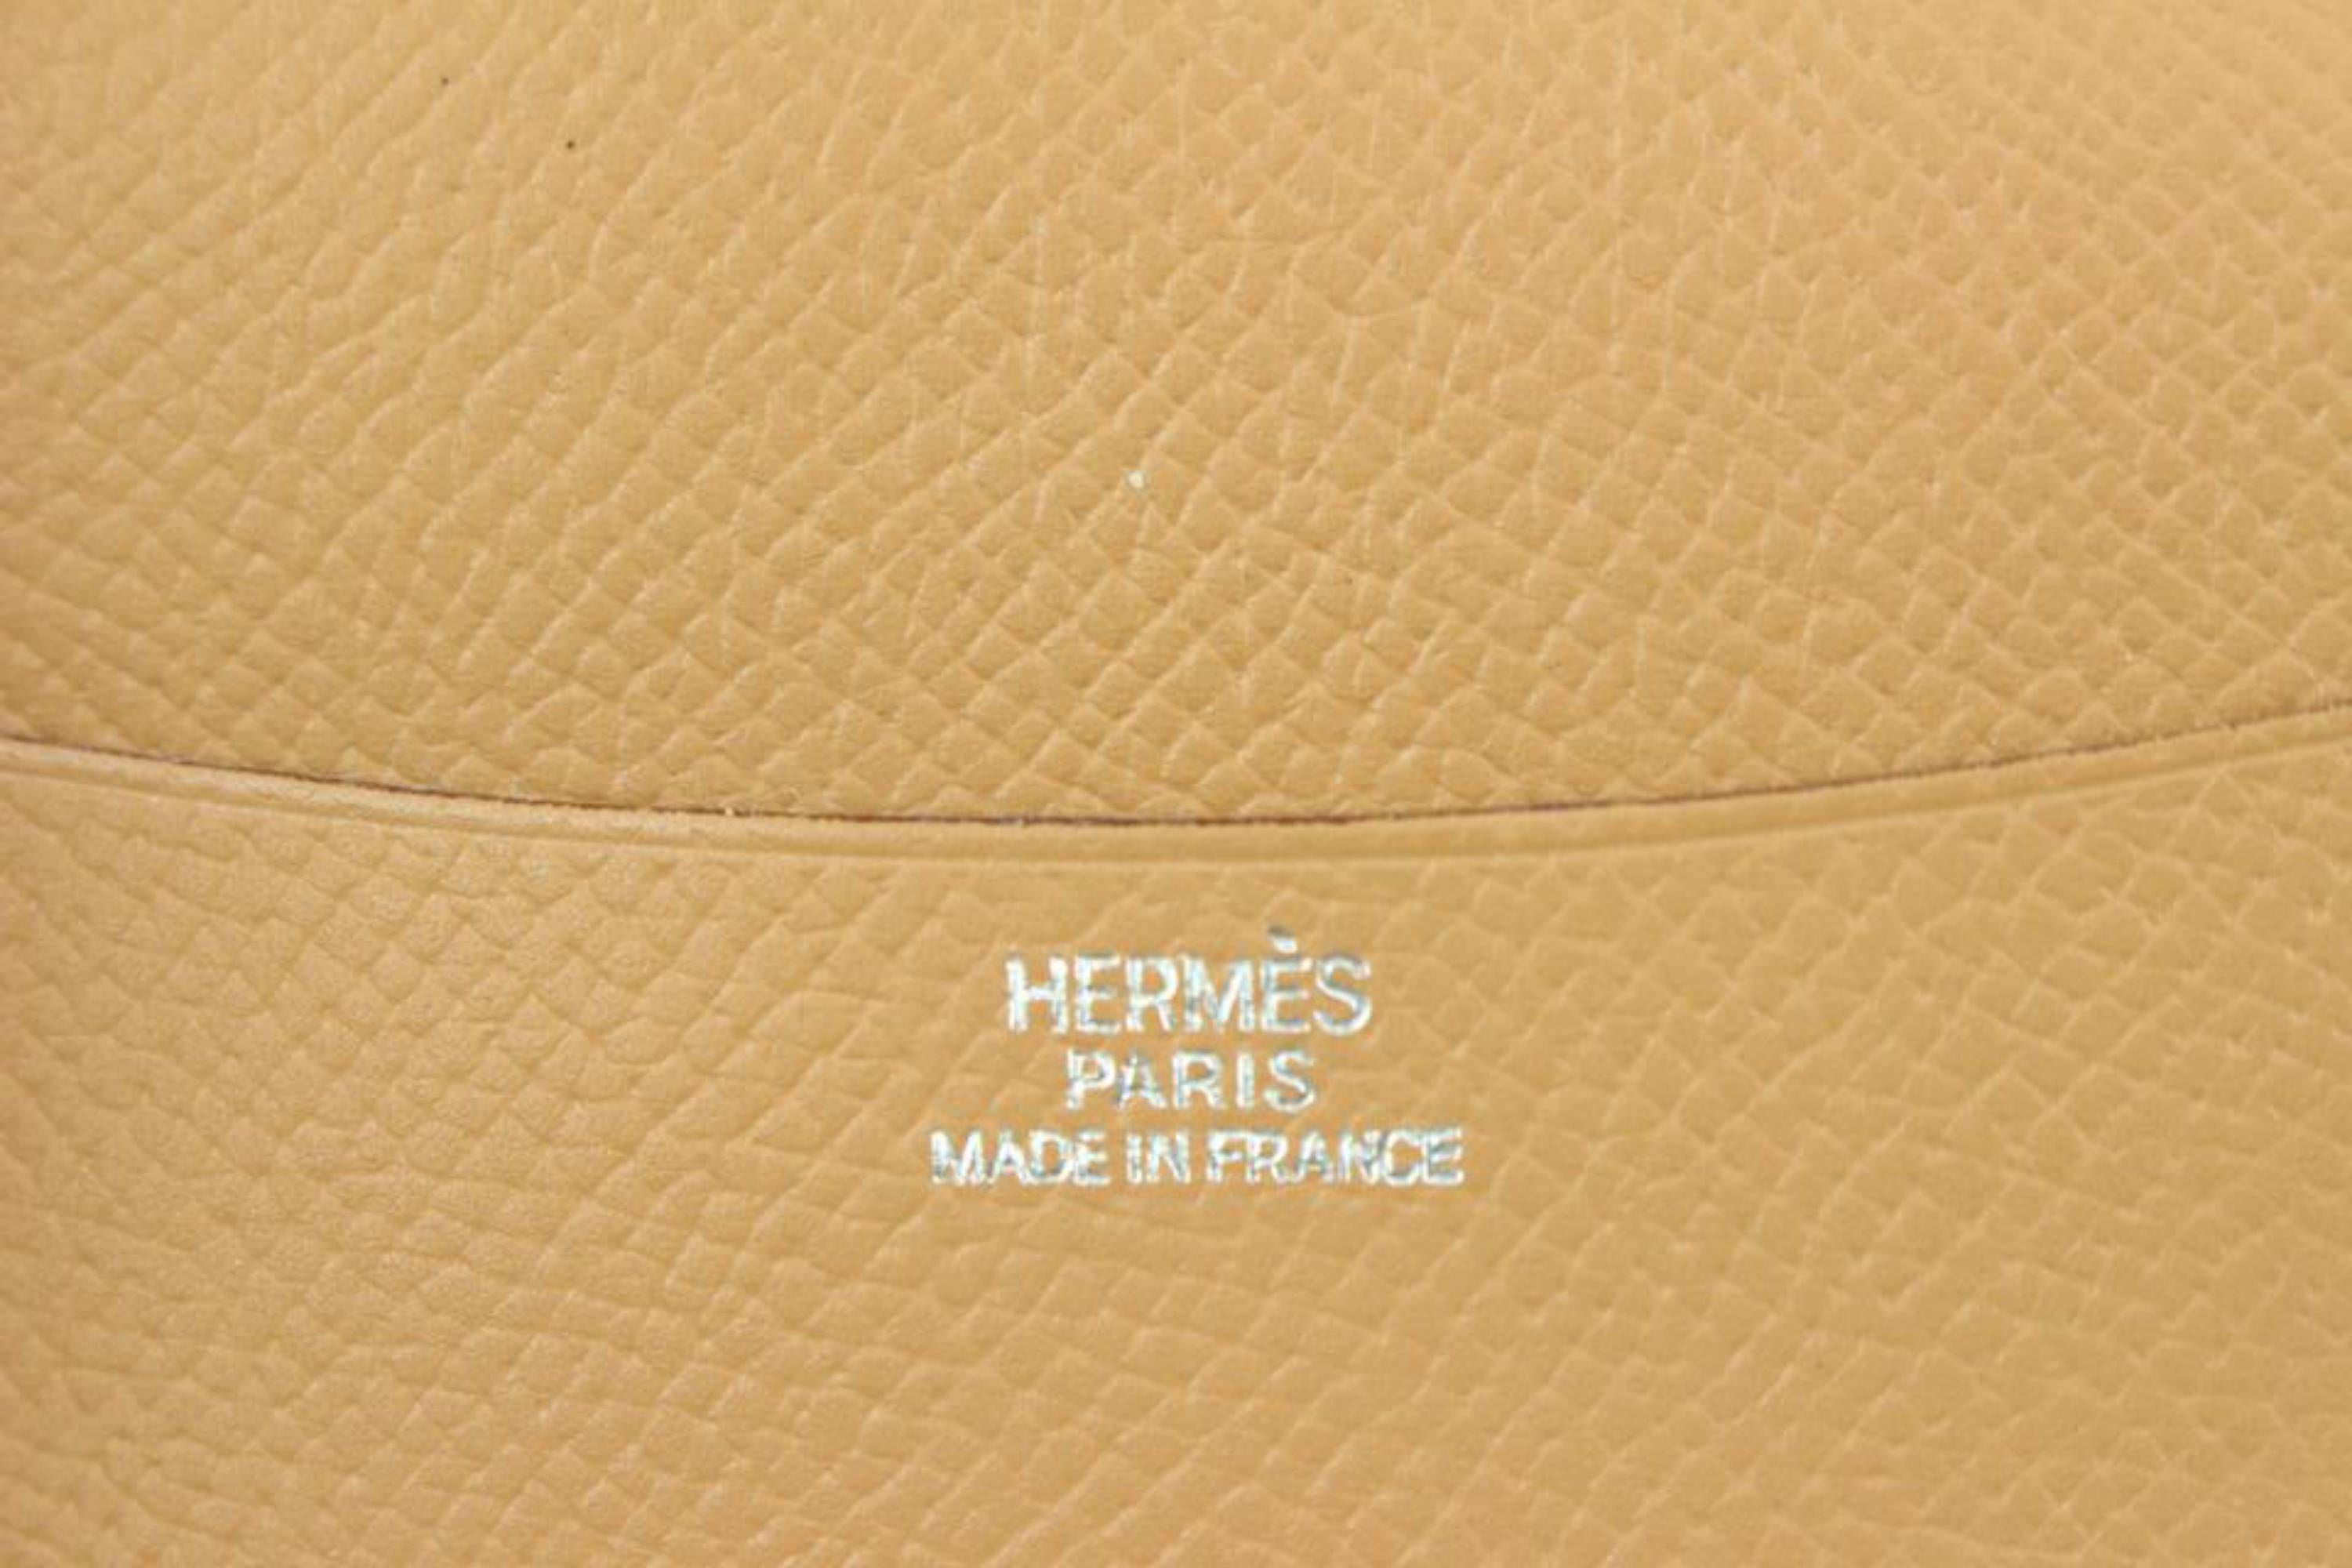 Hermès Blue Jean  Leather Simple Agenda Cover PM 15h426s 6